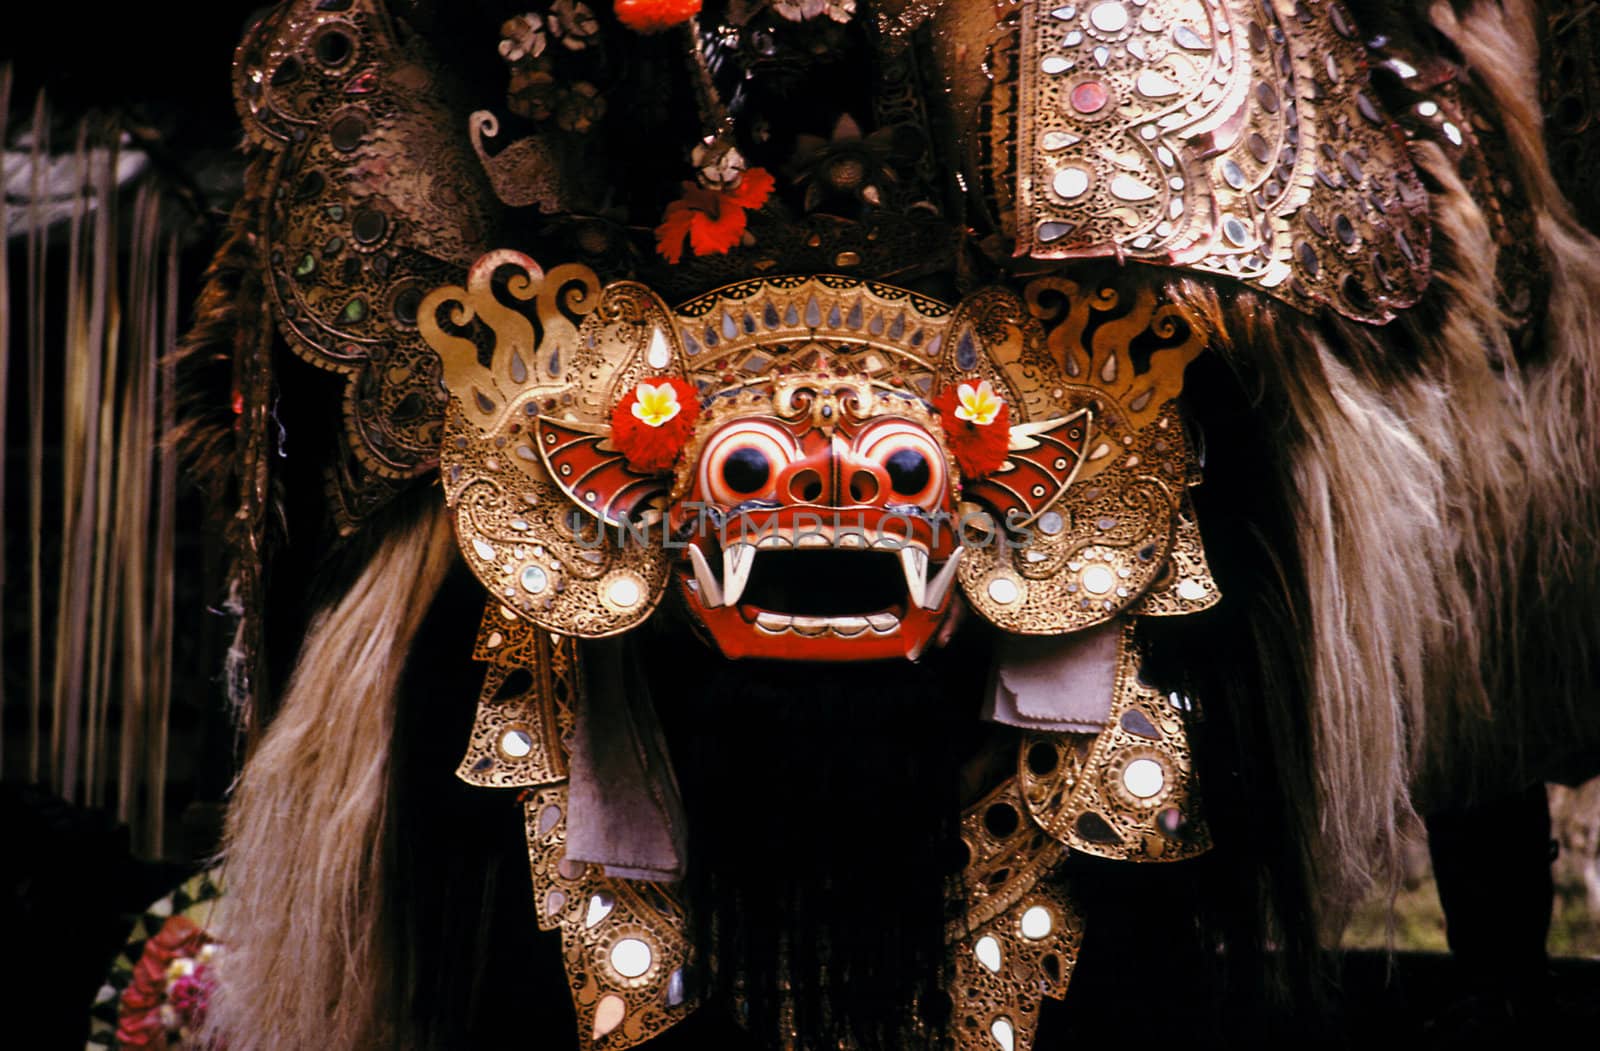 Indonesian mask